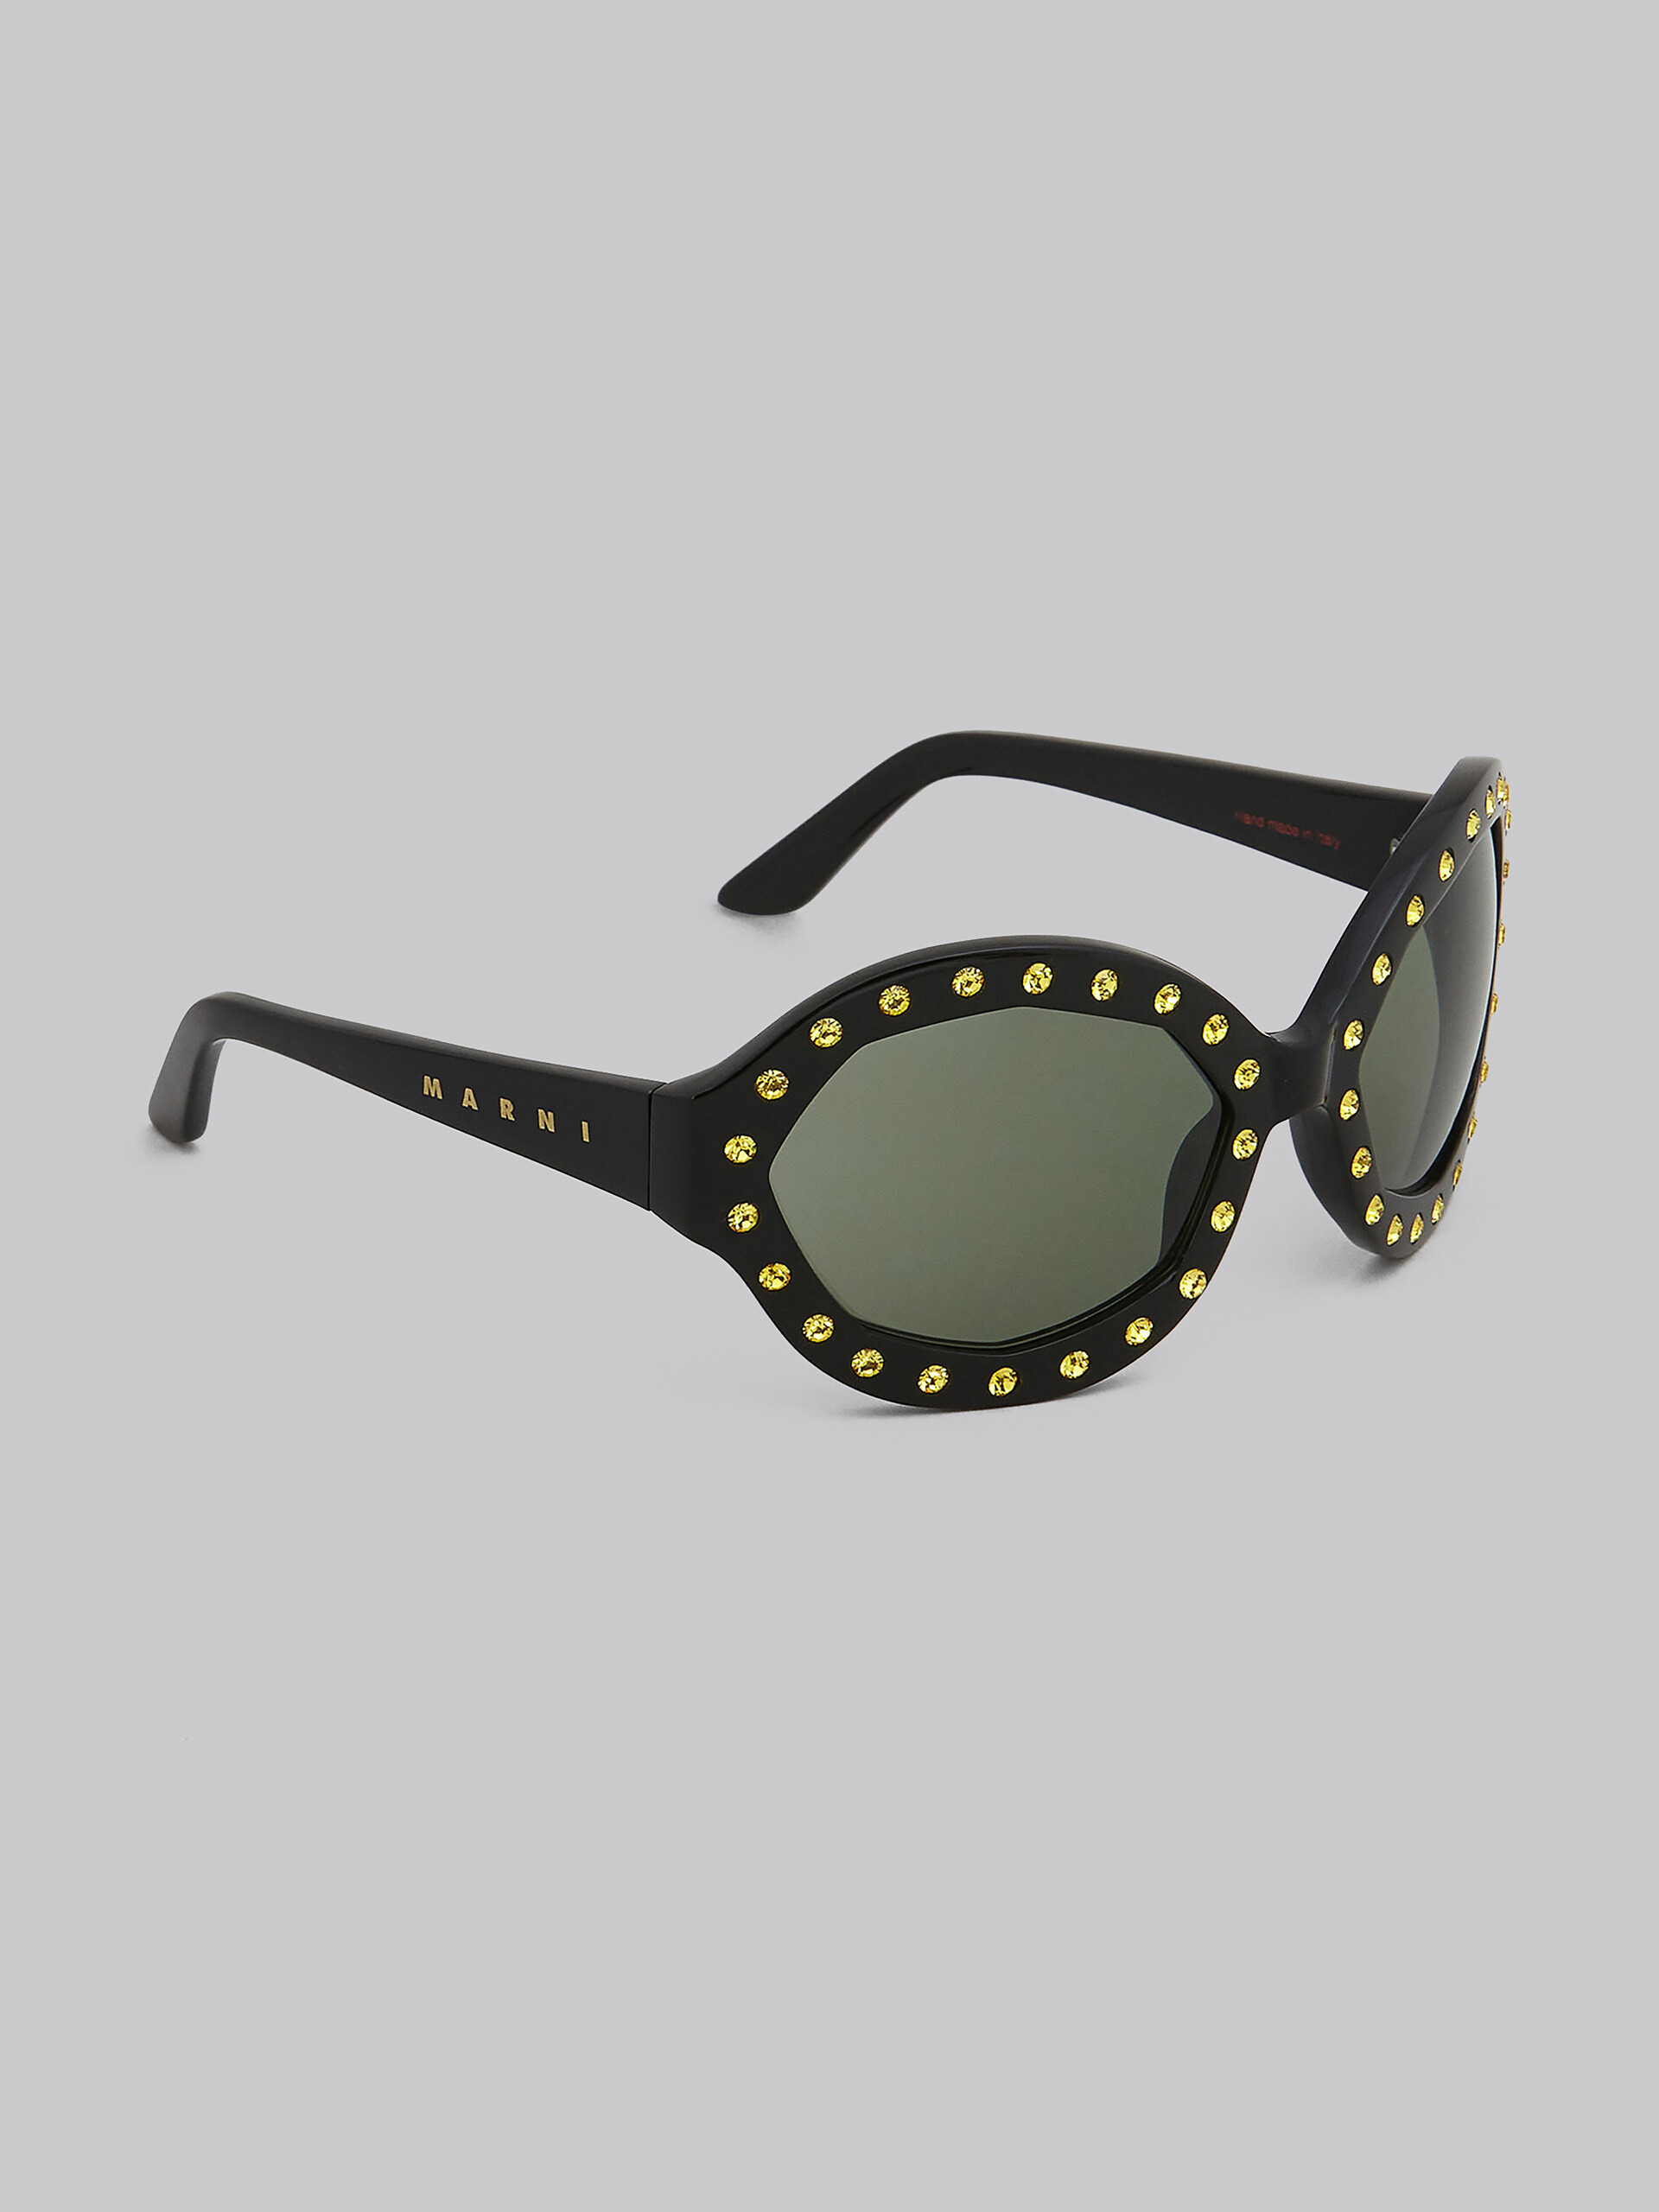 NAICA MINE black acetate sunglasses - Optical - Image 2